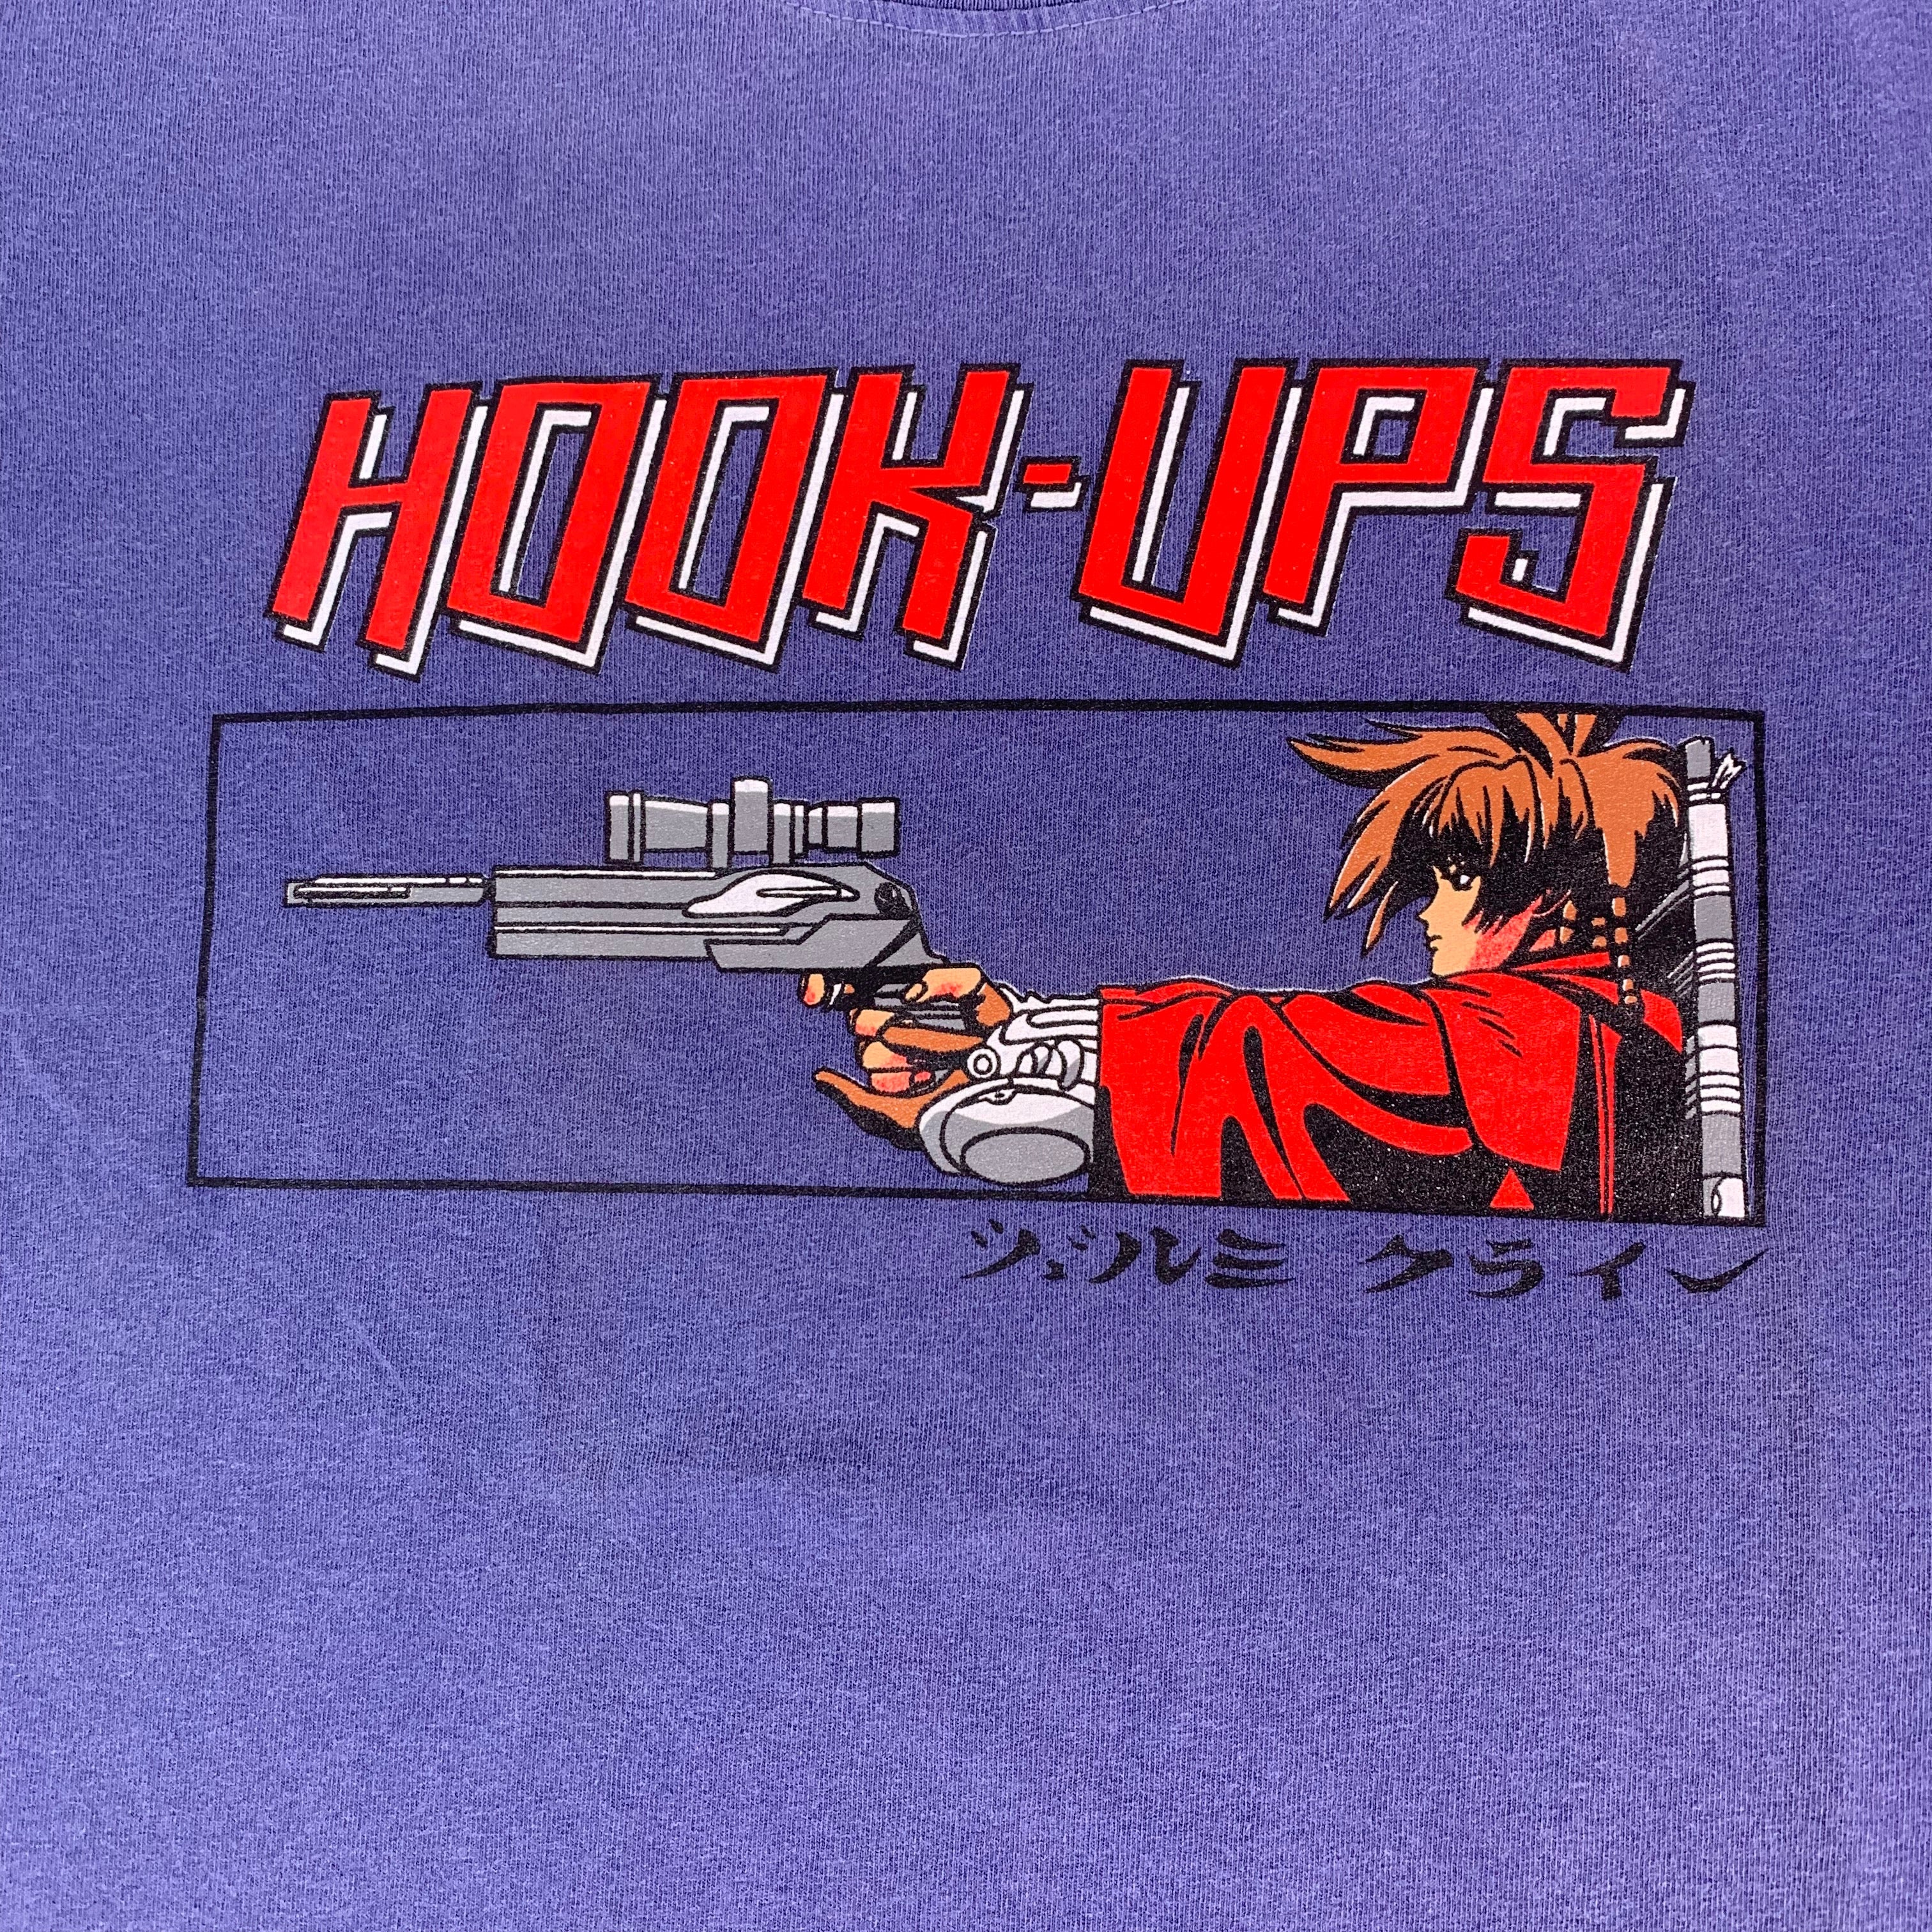 Vintage Hook-Ups Gun T-Shirt